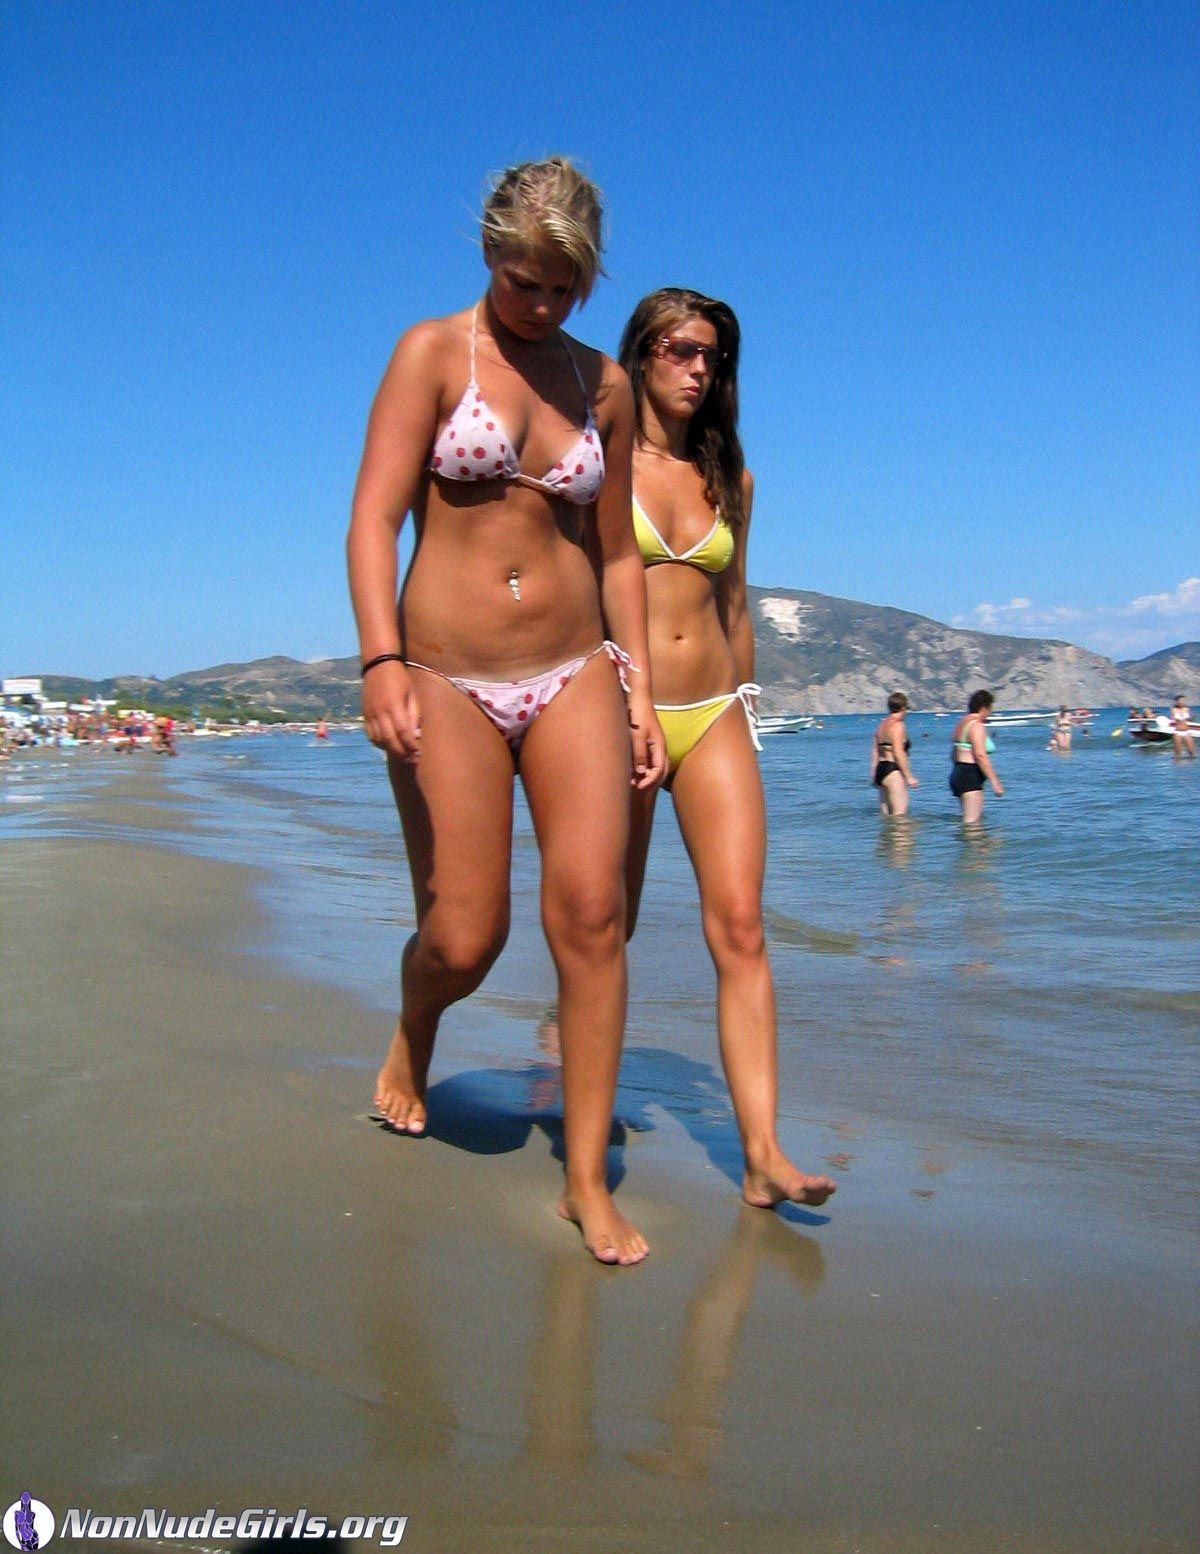 Immagini di ragazze calde in bikini
 #60682767